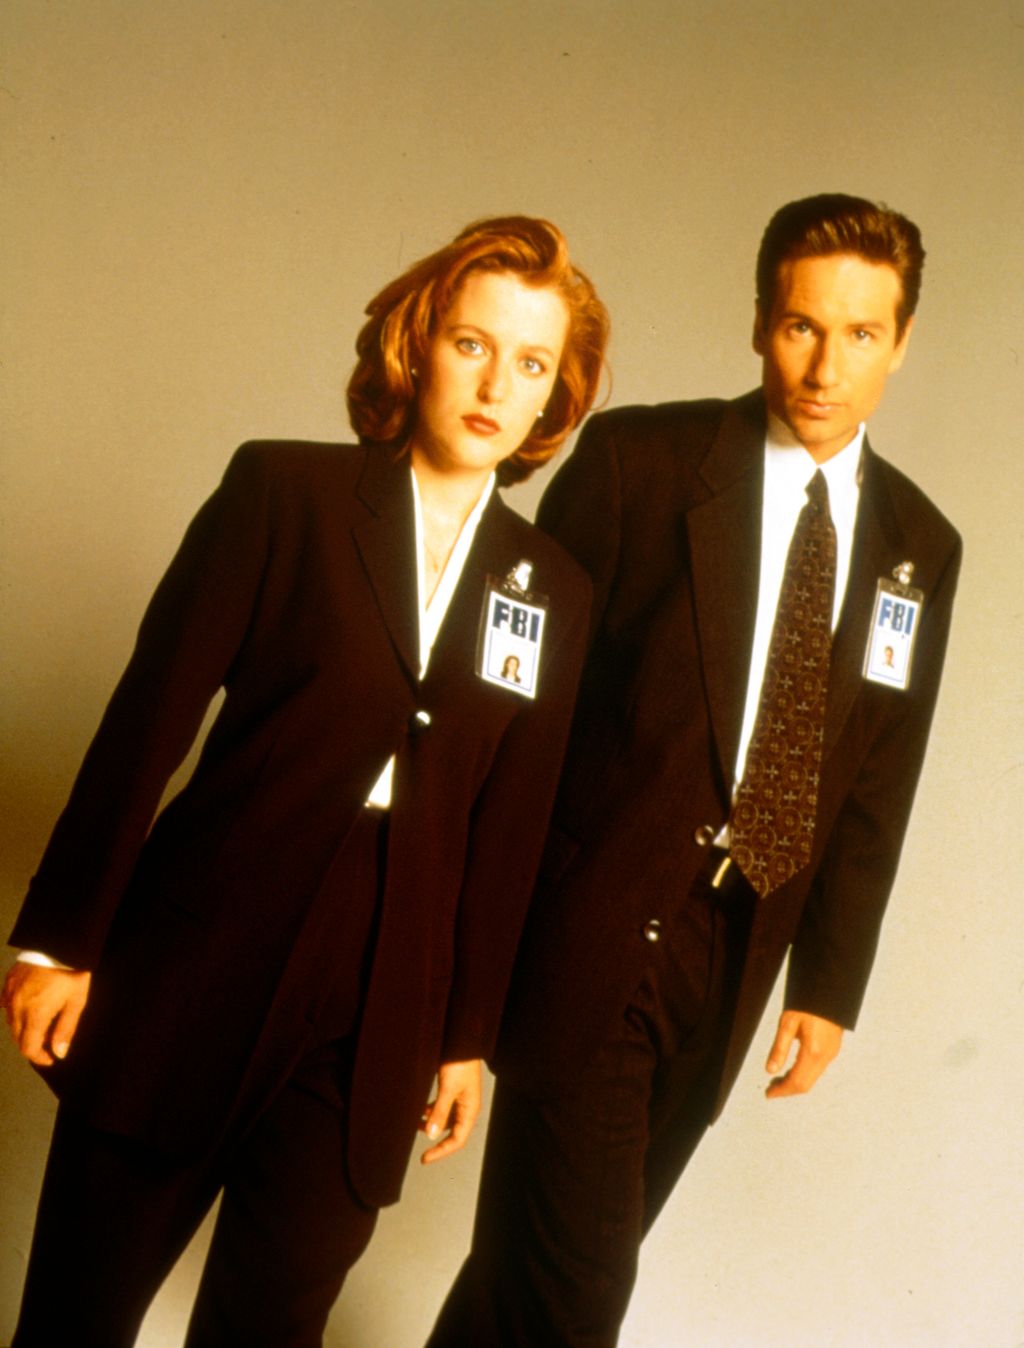 X-Akták The X-Files (1993) David Duchovny, Gillian Anderson 